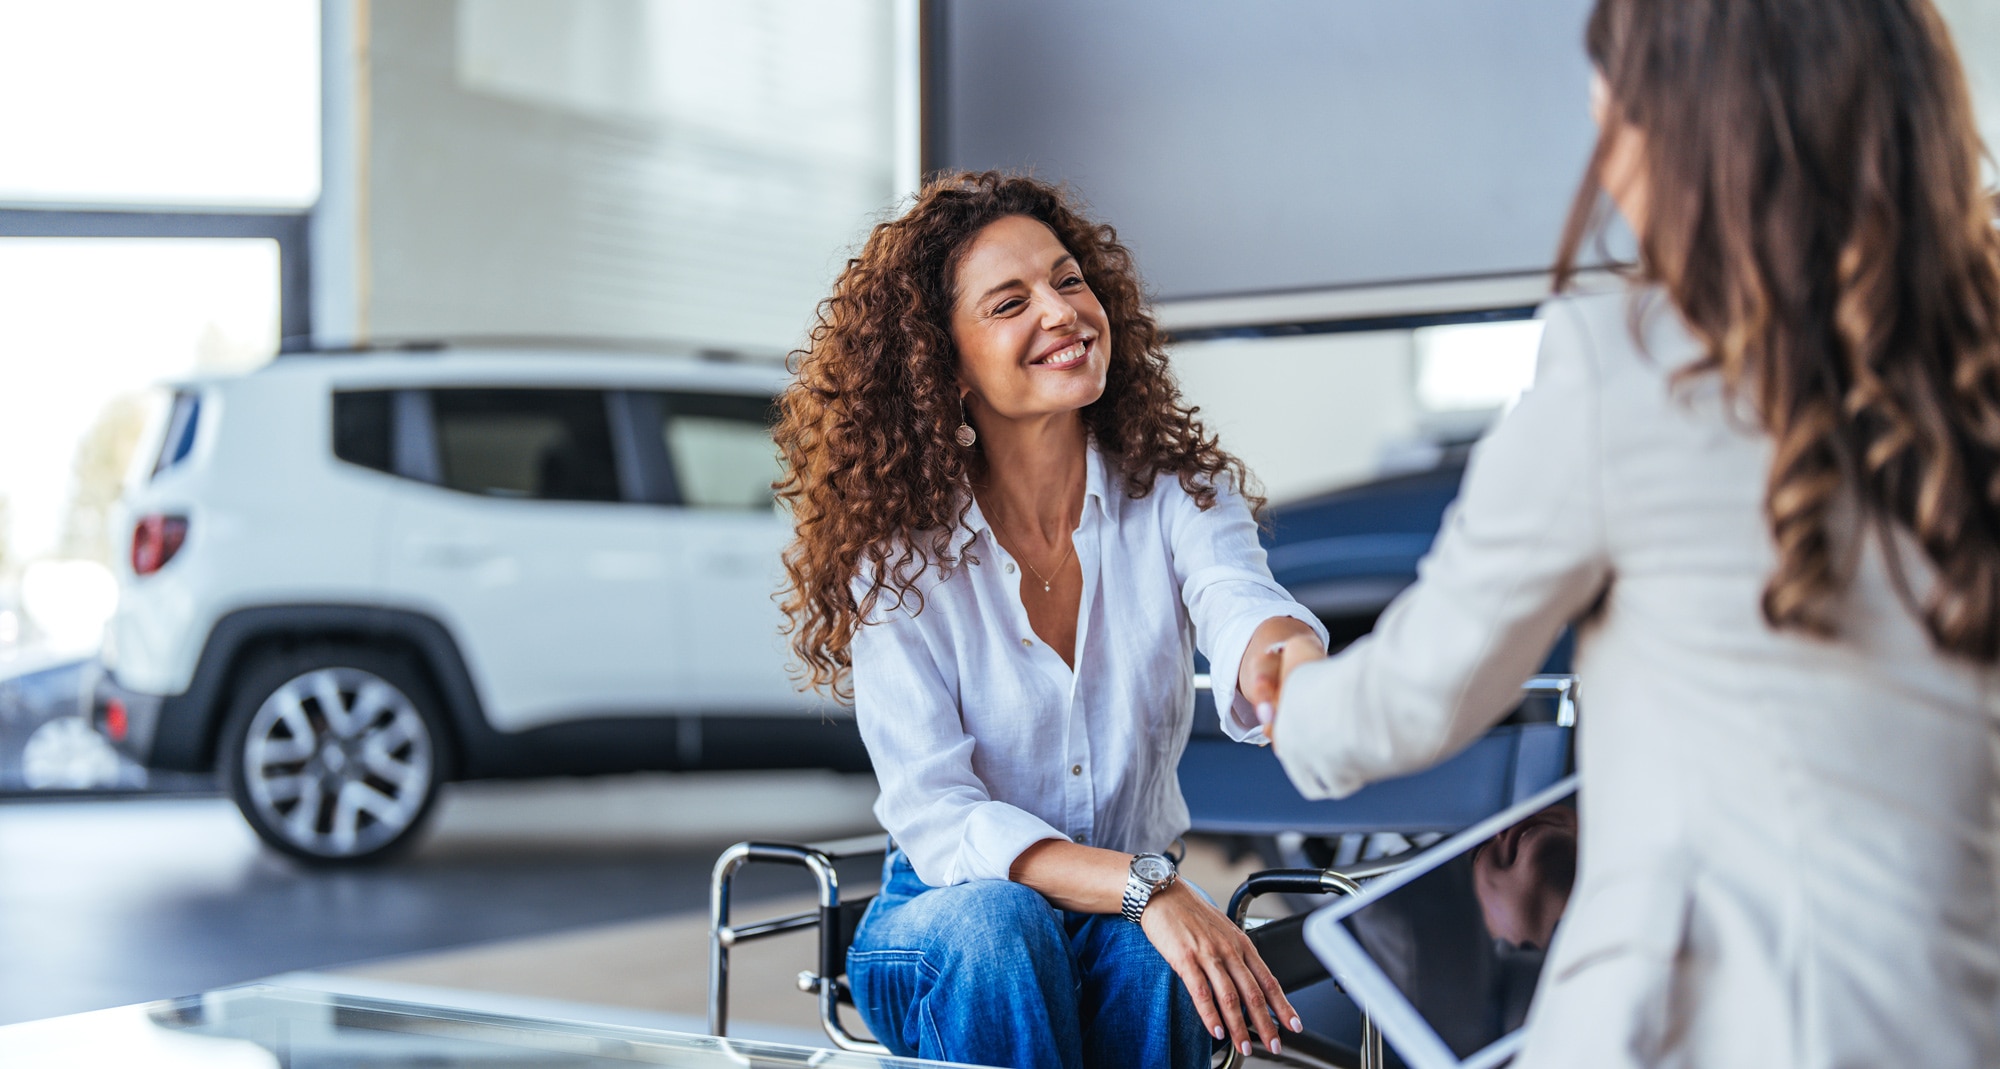 Smiling women shaking hands at a car dealership